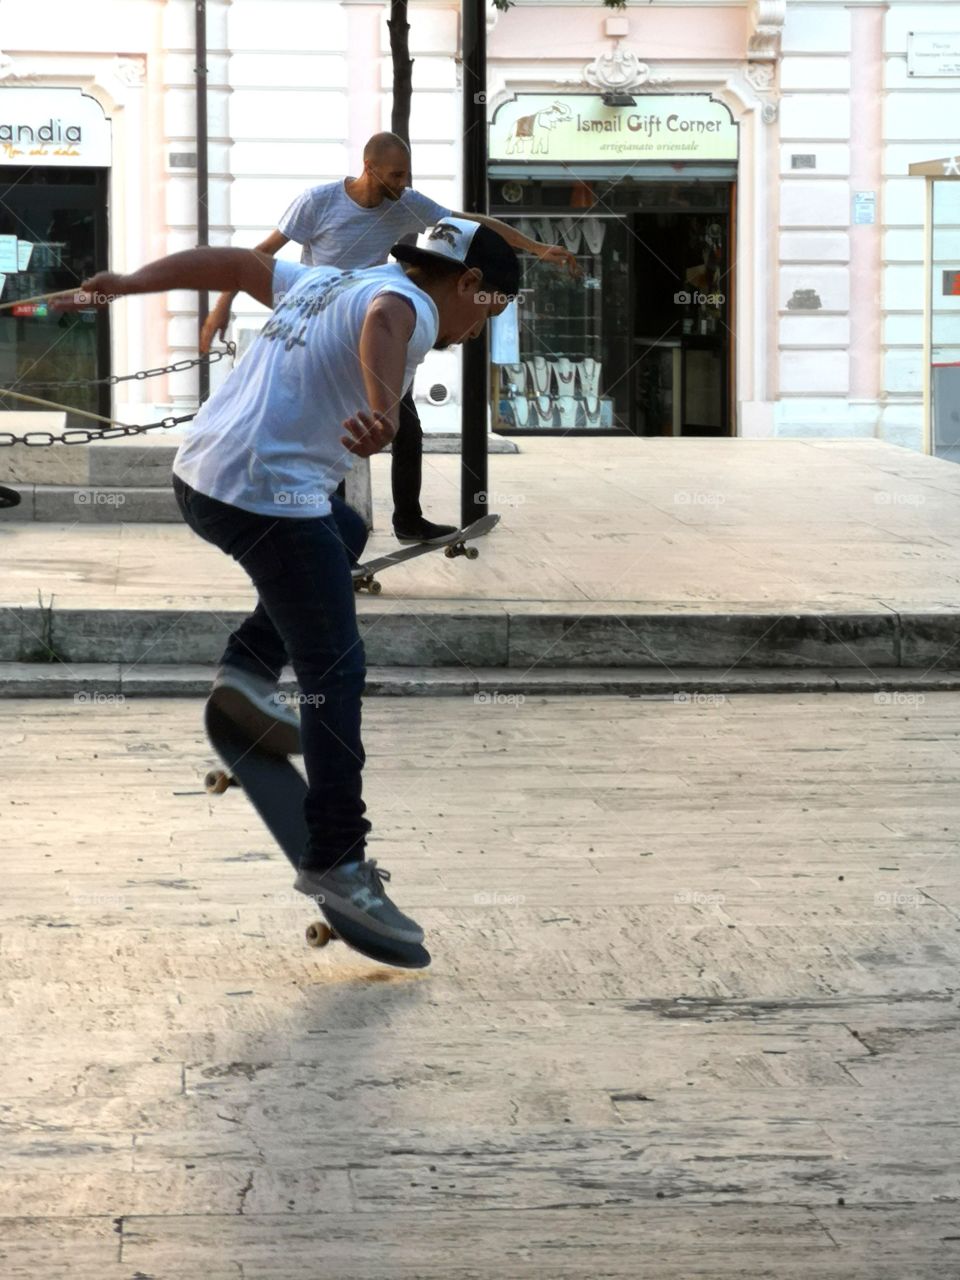 Urban skaters